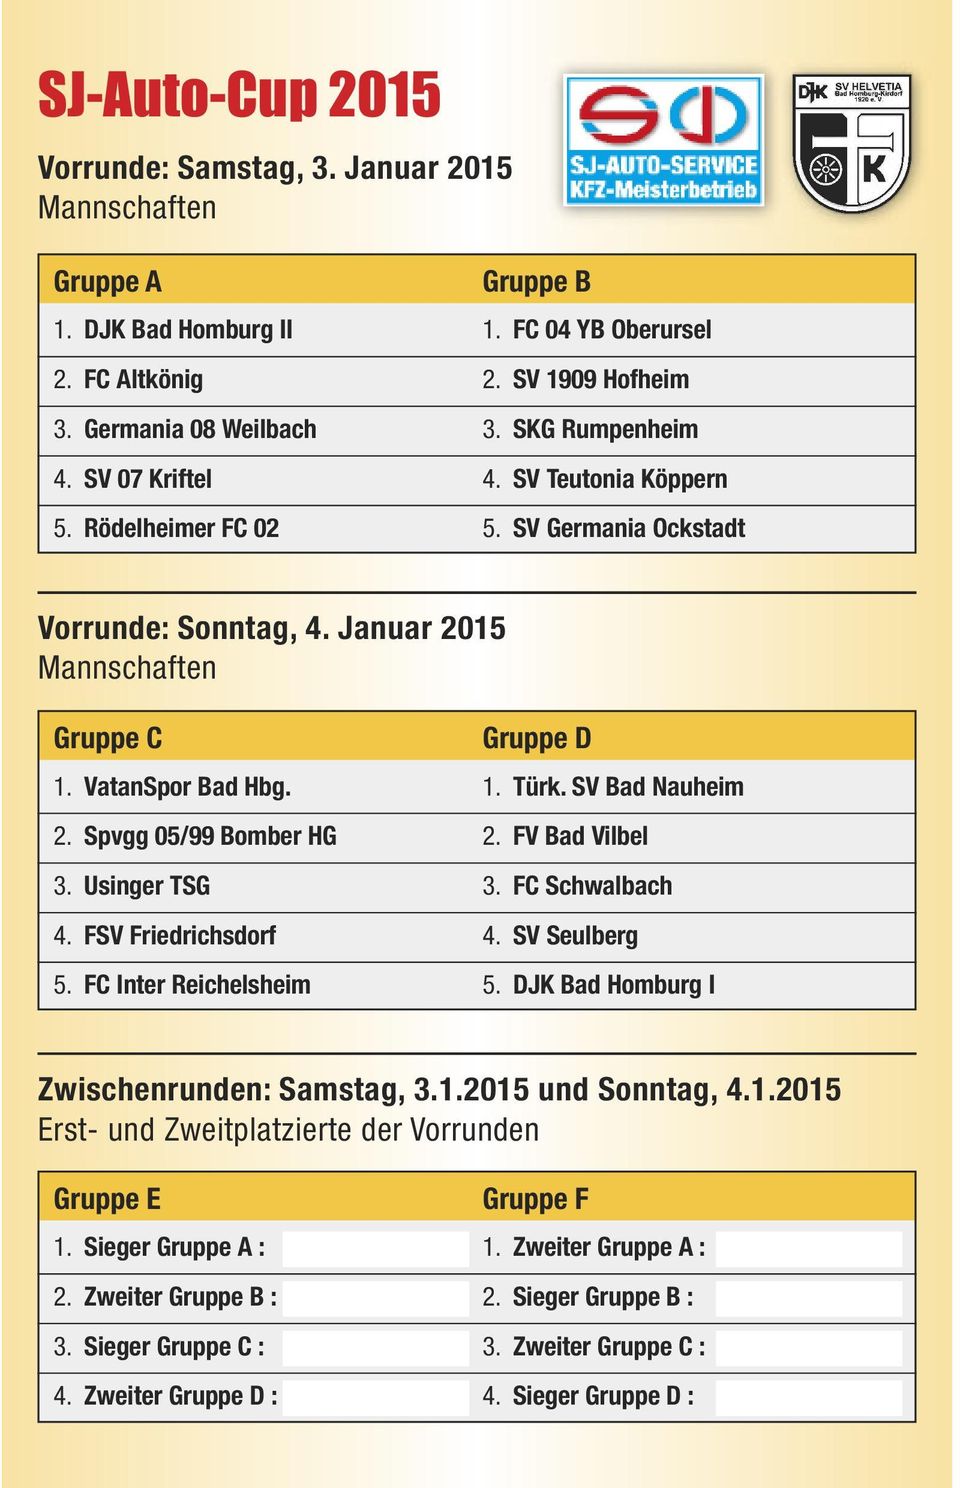 SV Bad Nauheim 2. Spvgg 05/99 Bomber HG 2. FV Bad Vilbel 3. Usinger TSG 3. FC Schwalbach 4. FSV Friedrichsdorf 4. SV Seulberg 5. FC Inter Reichelsheim 5. DJK Bad Homburg I Zwischenrunden: Samstag, 3.